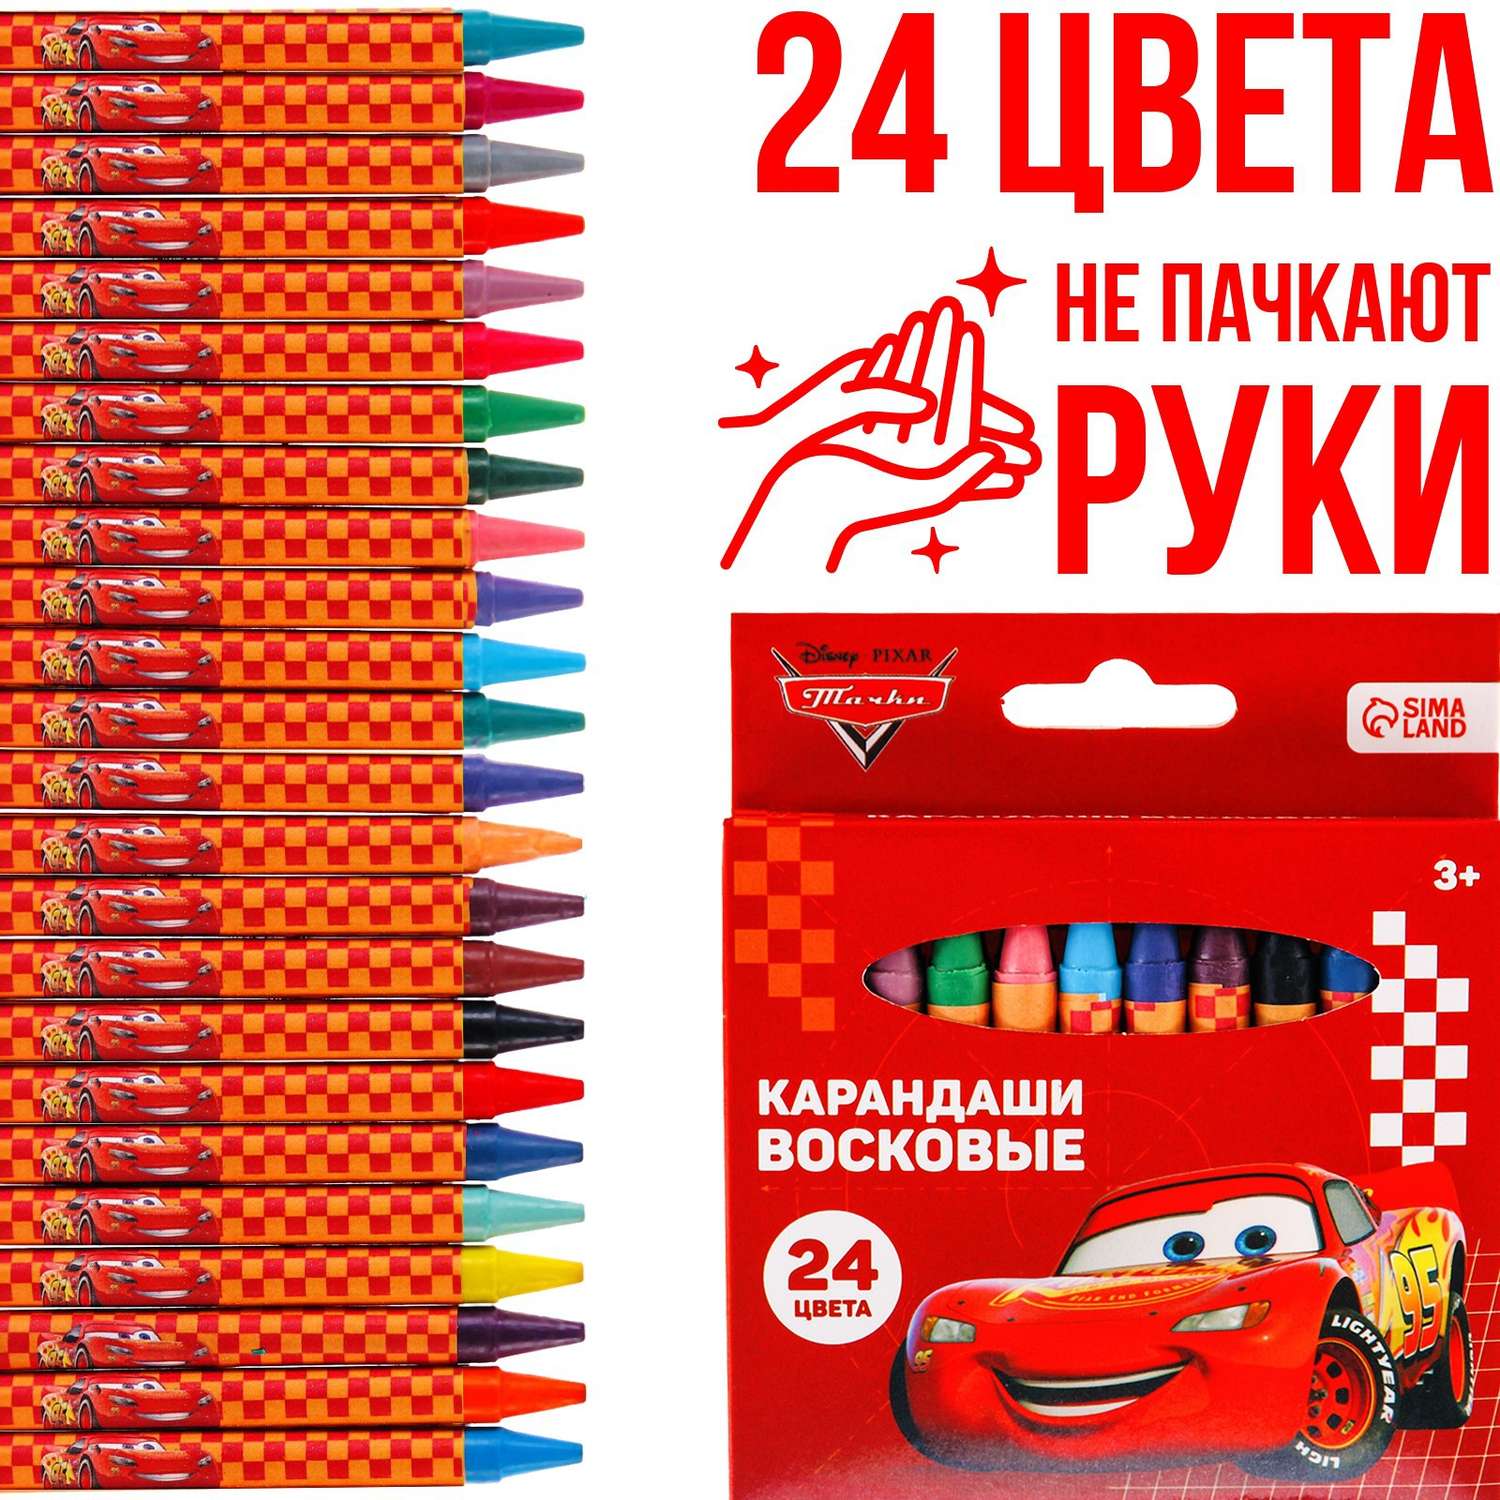 Восковые Disney карандаши набор 24 цвета Тачки - фото 1